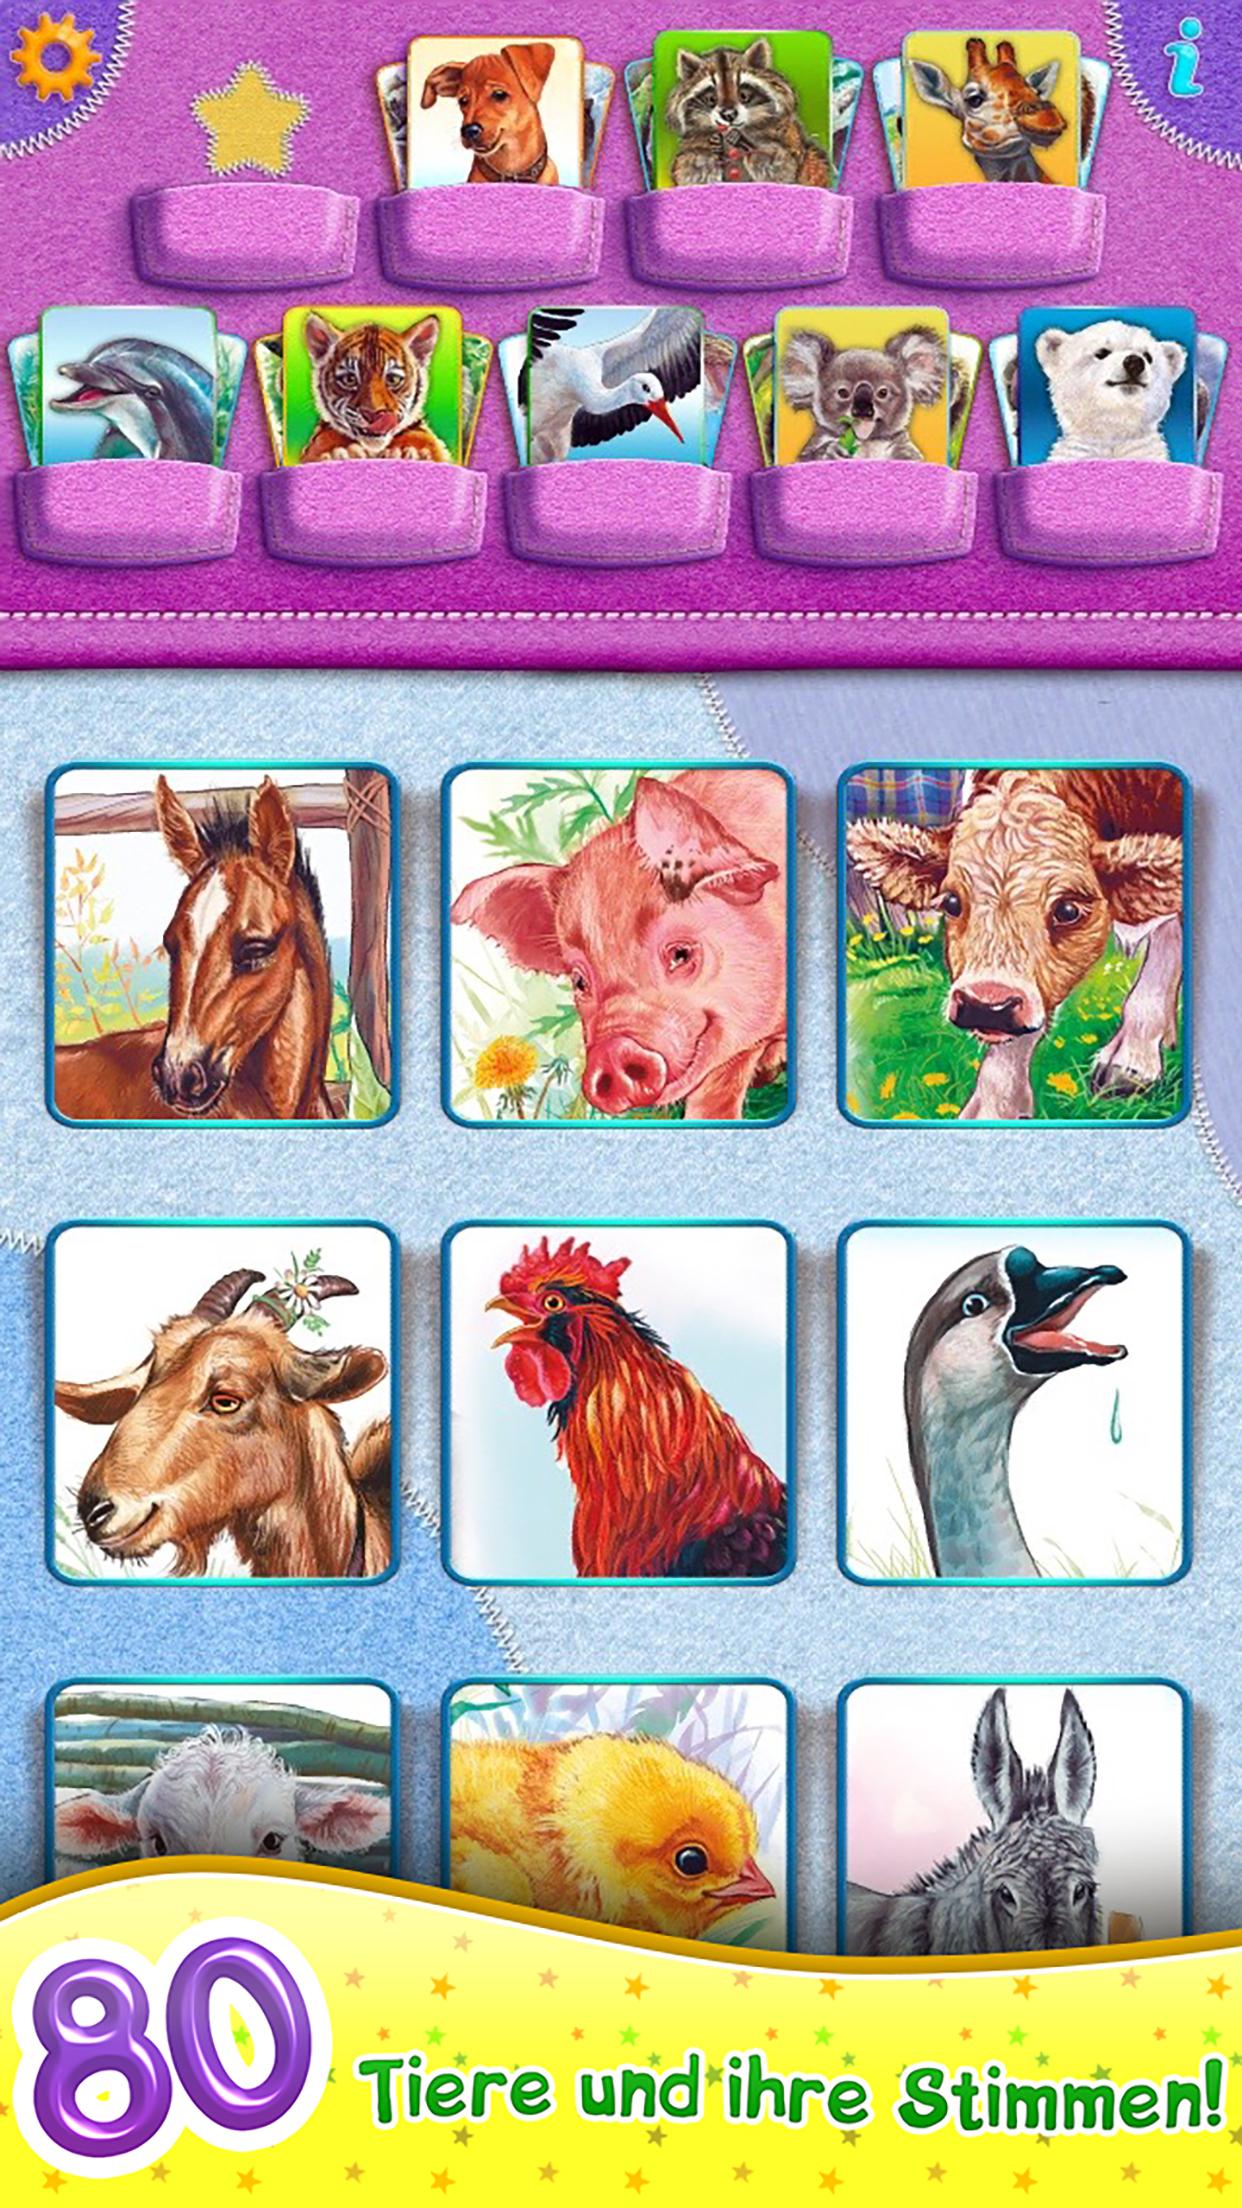 Android application Animal Kingdom for kids! FULL screenshort